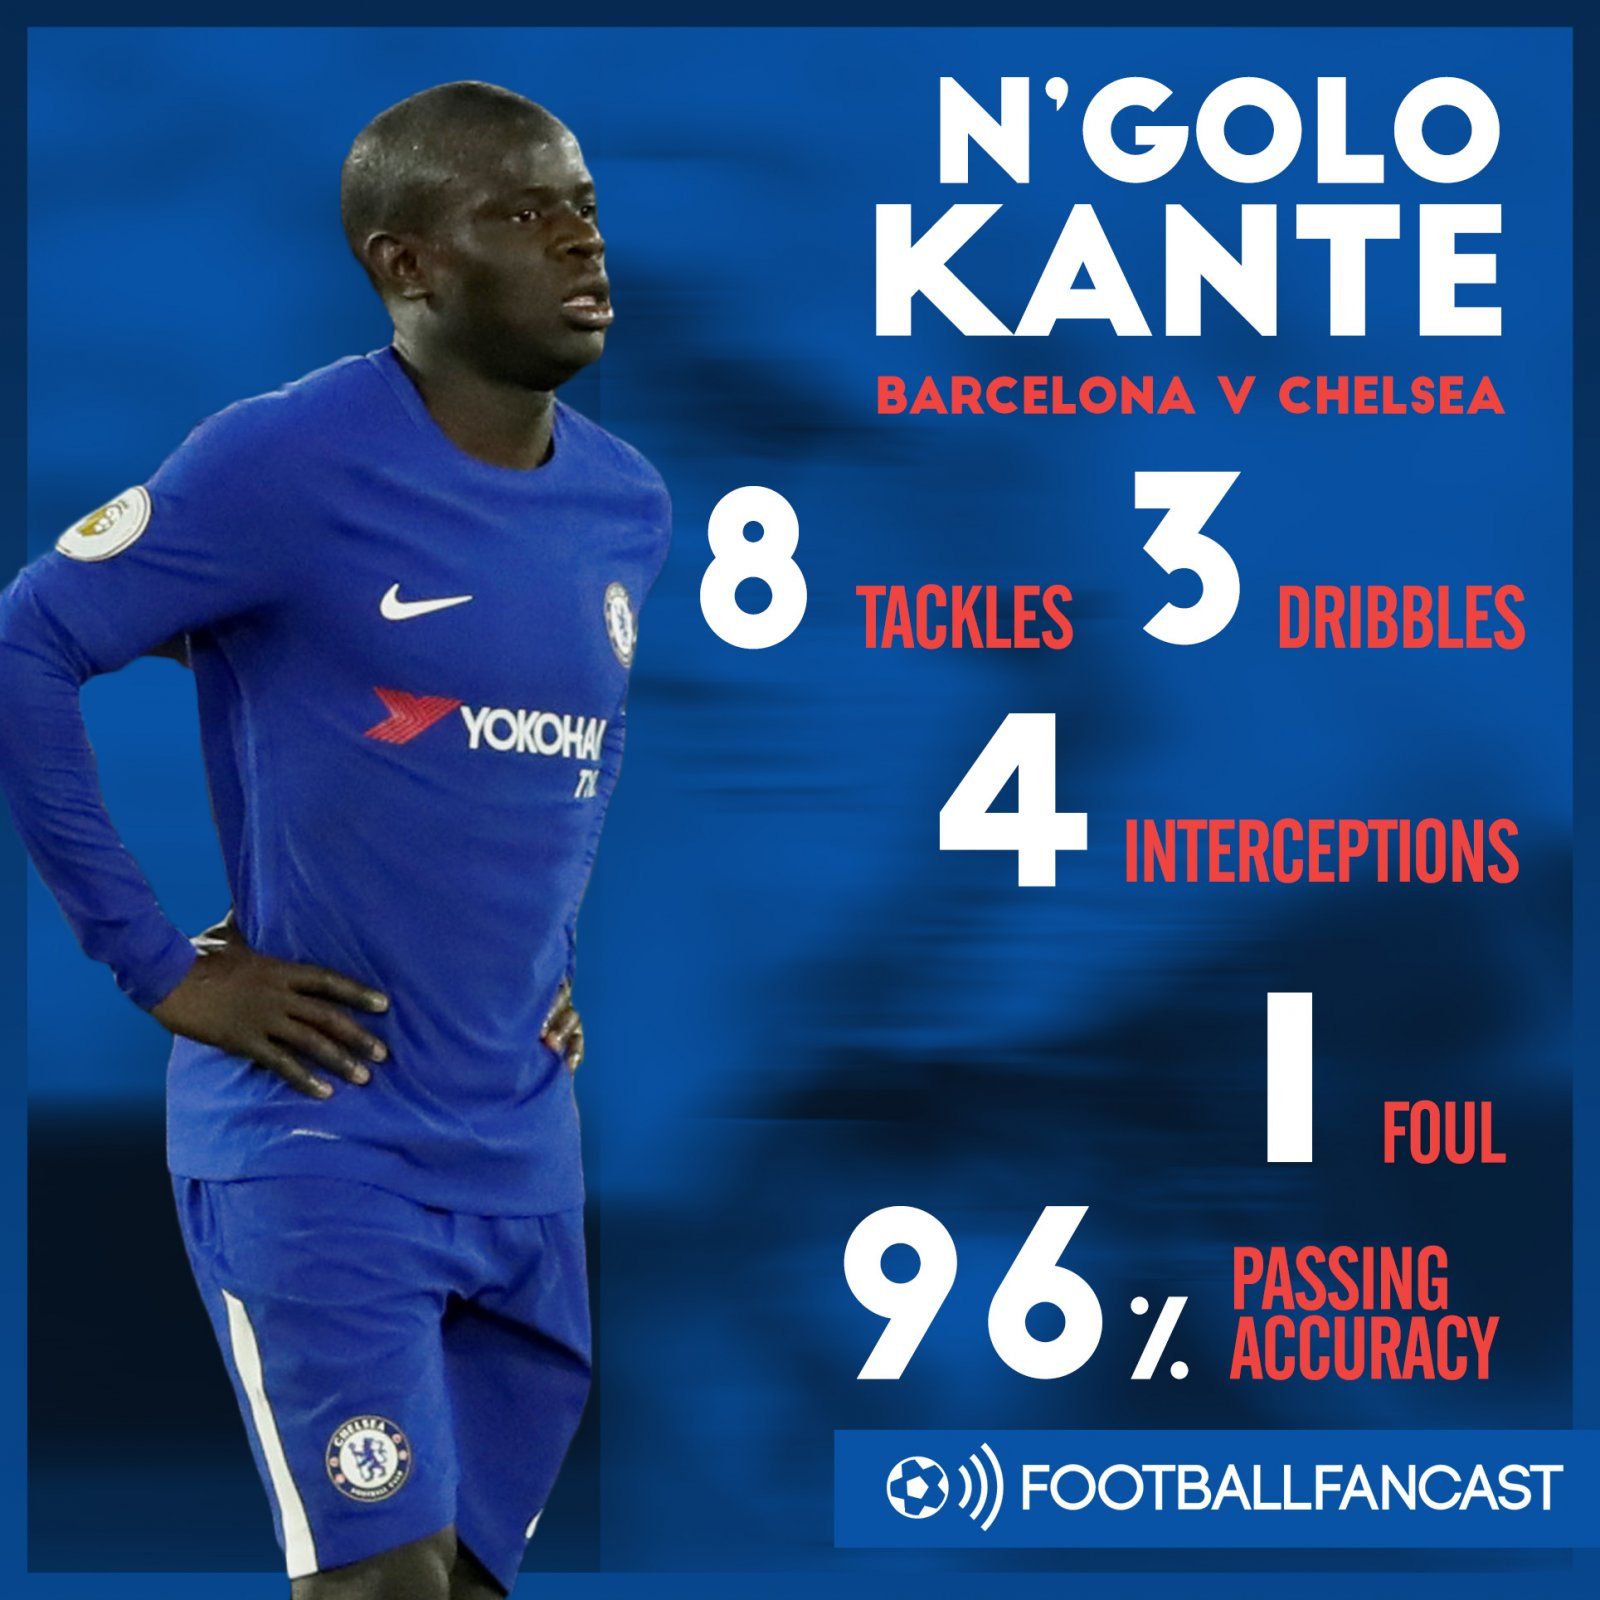 N'golo Kante's stats vs Barcelona